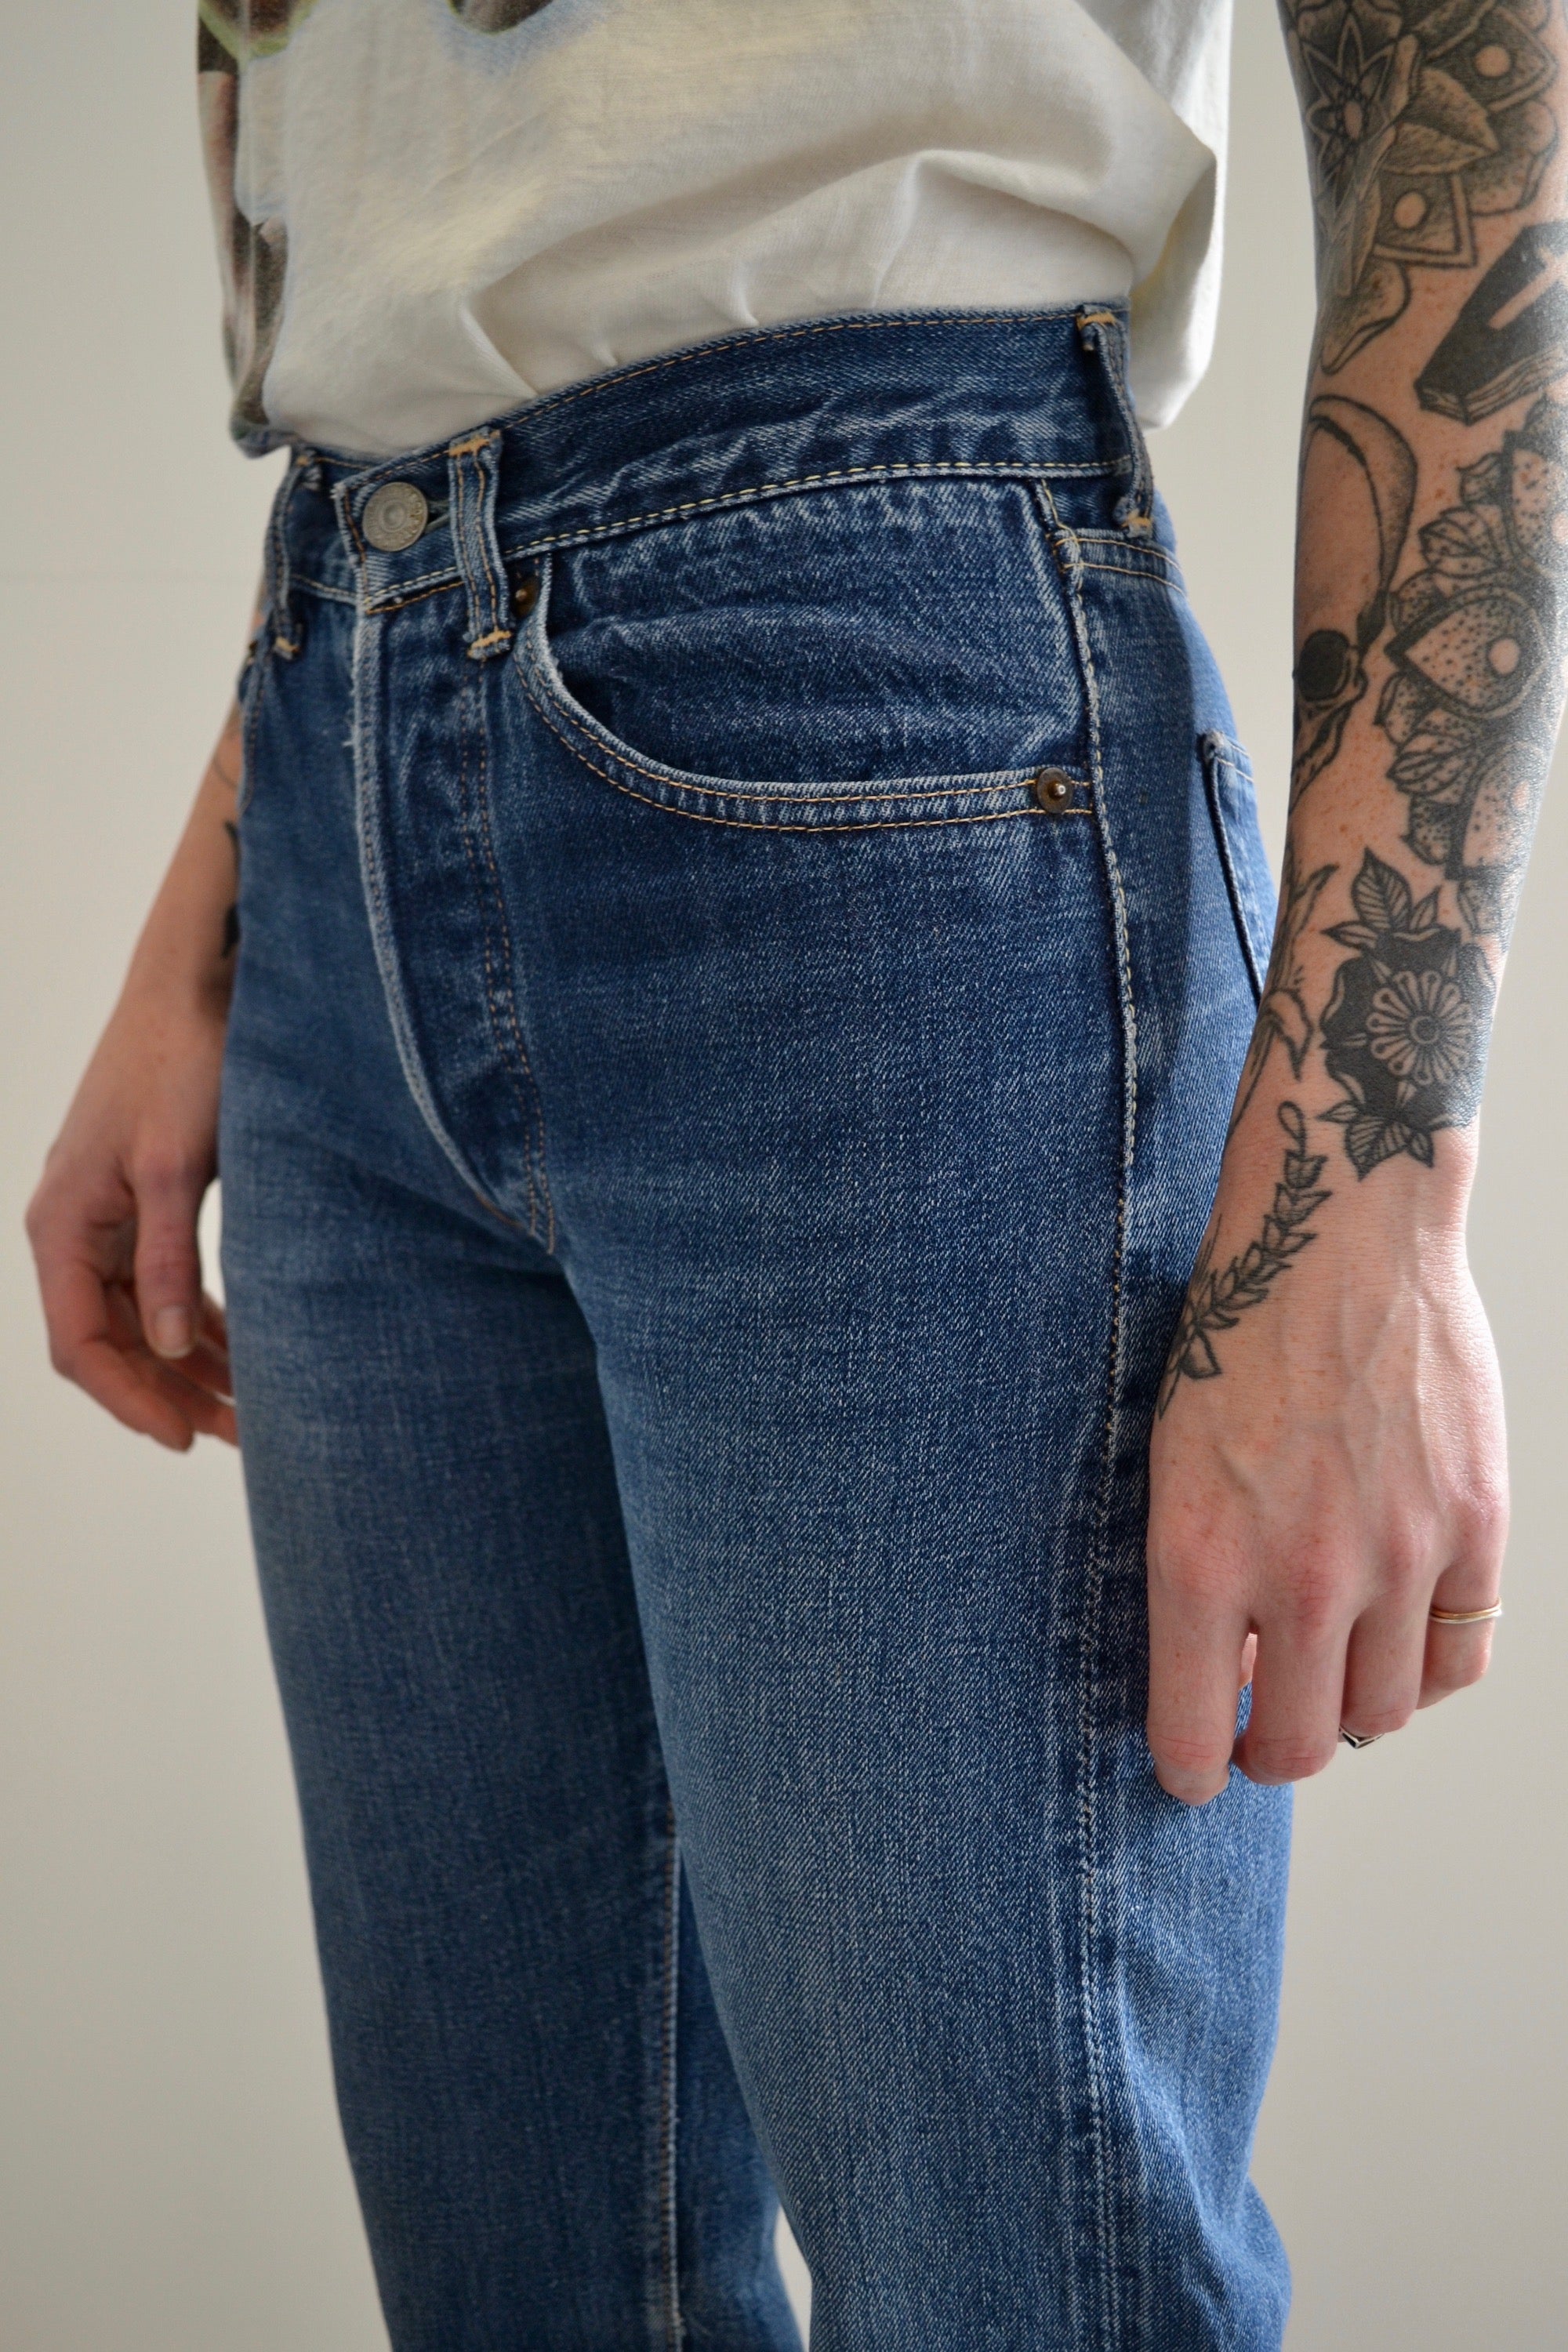 Early 1960's Levis Big E Hidden Rivet Selvedge Jeans